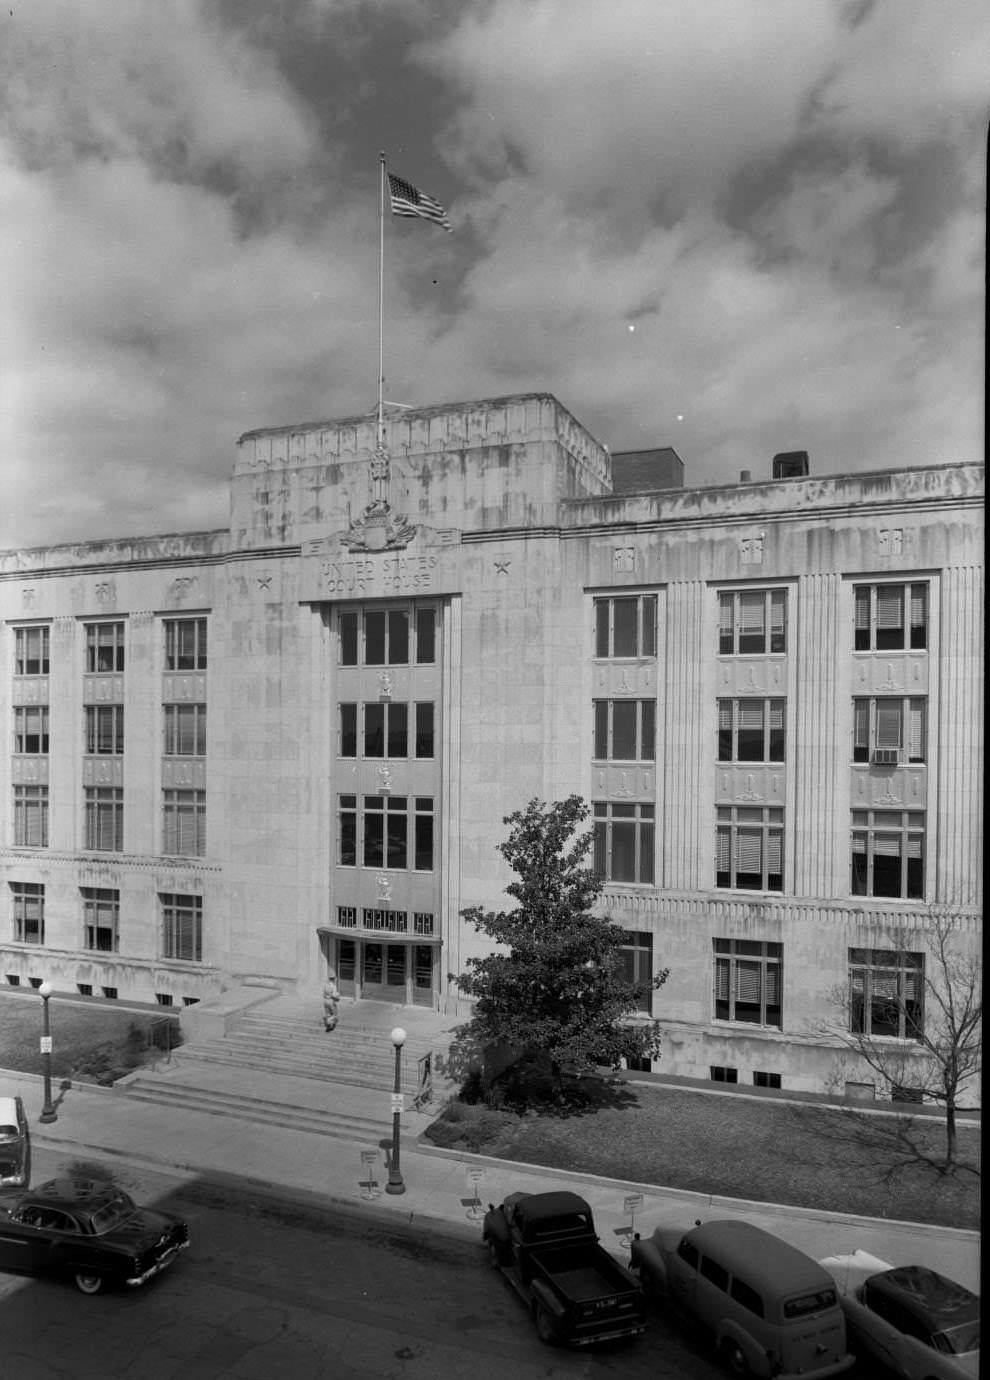 United States Courthouse at Austin, 1955